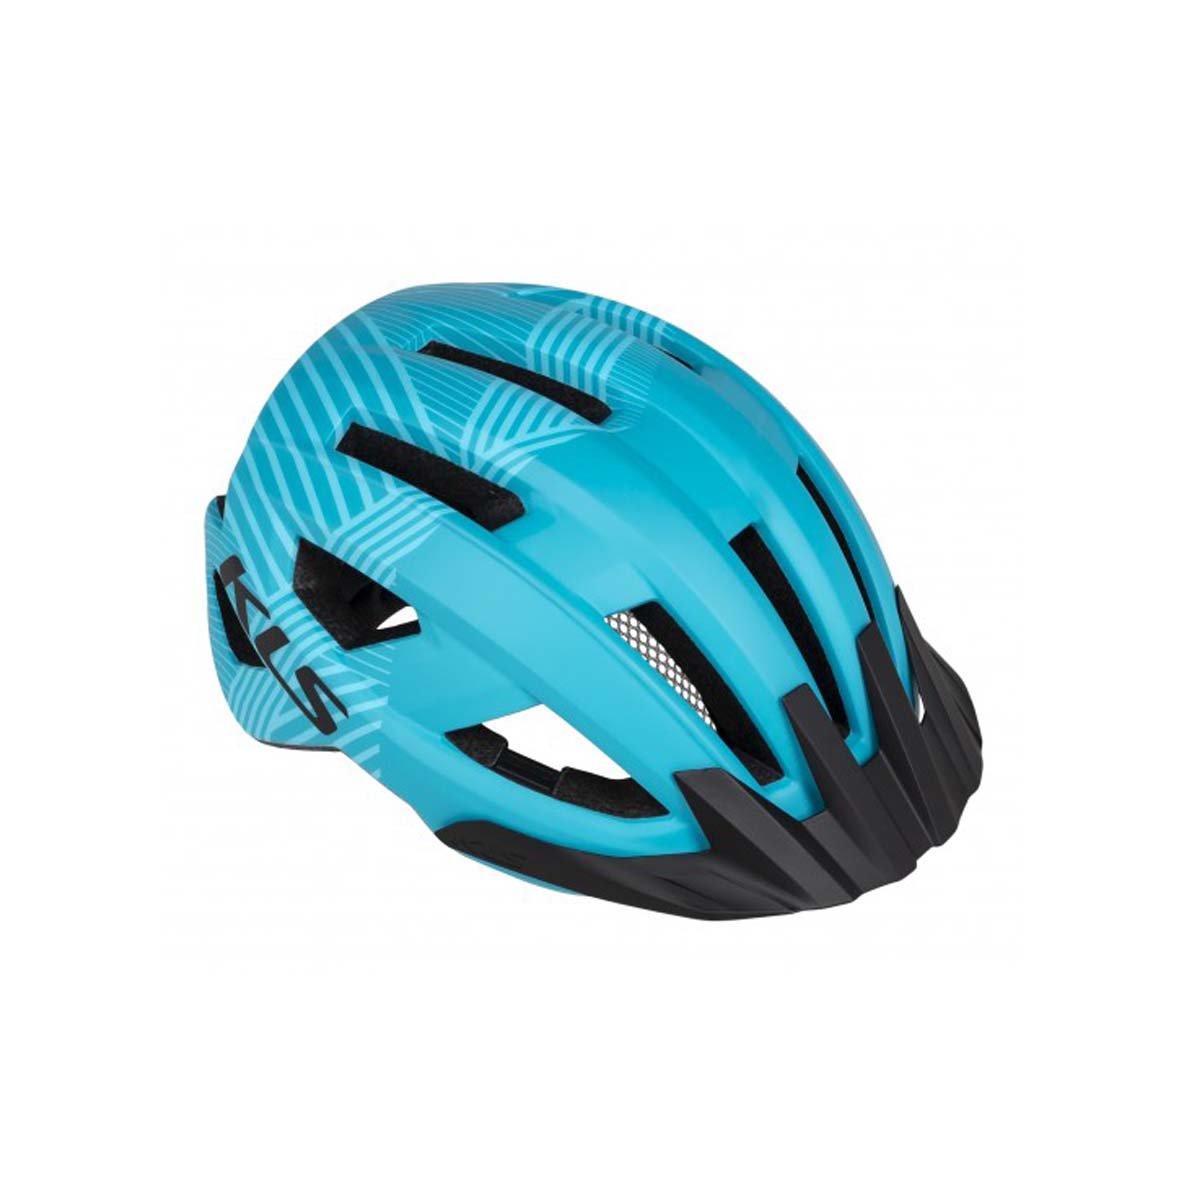 Helmet DAZE light blue - onlinedubaibicycles